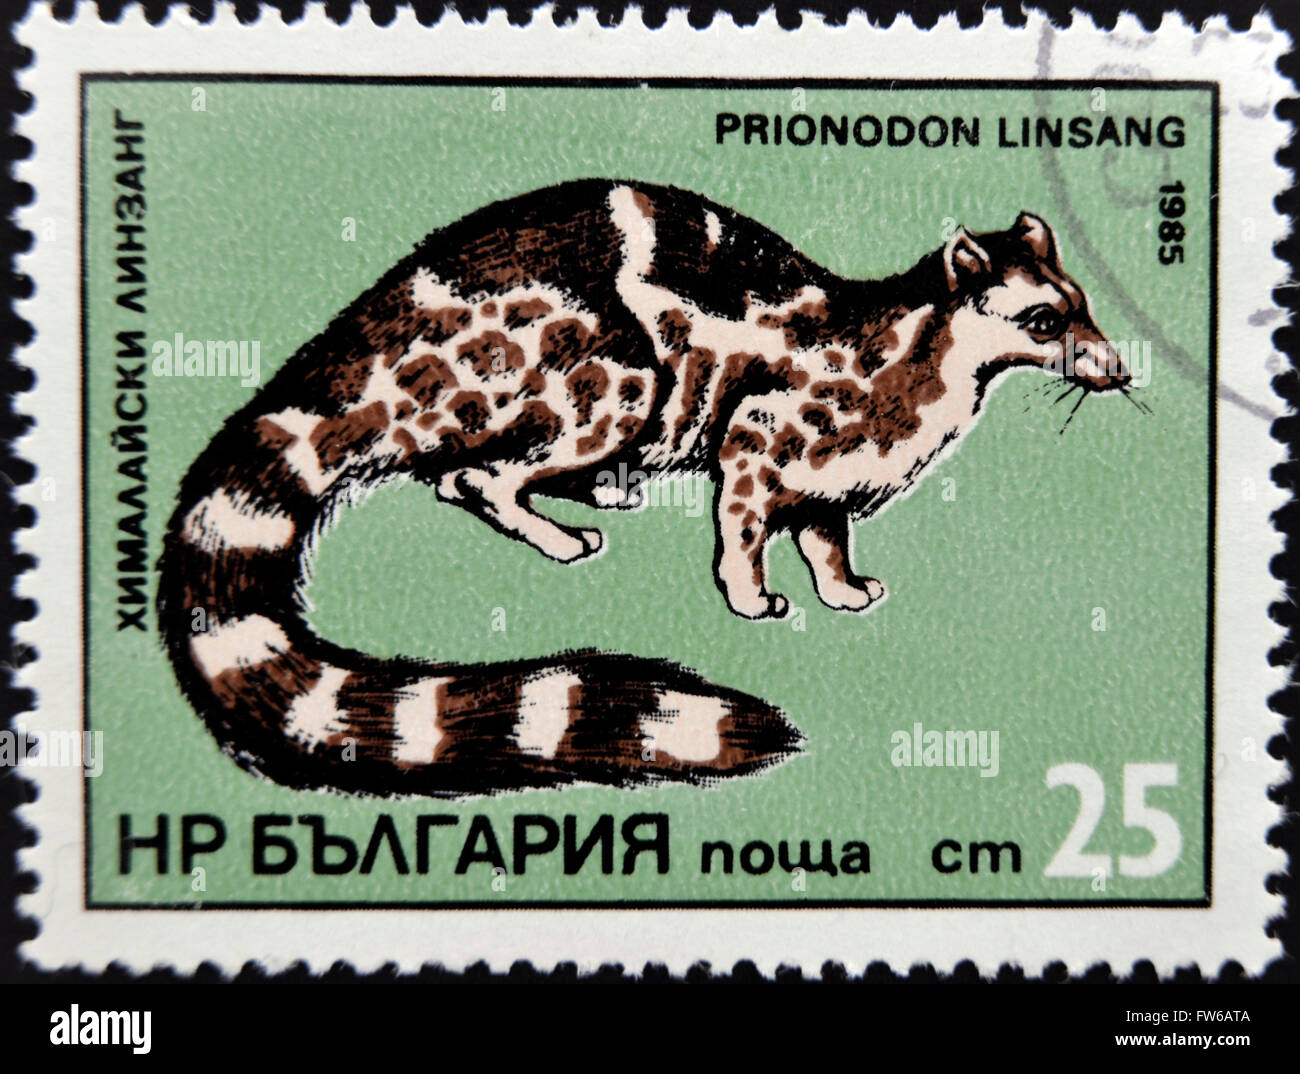 BULGARIA - CIRCA 1985: stamp printed in Bulgaria shows Prionodon linsang, circa 1985. Stock Photo